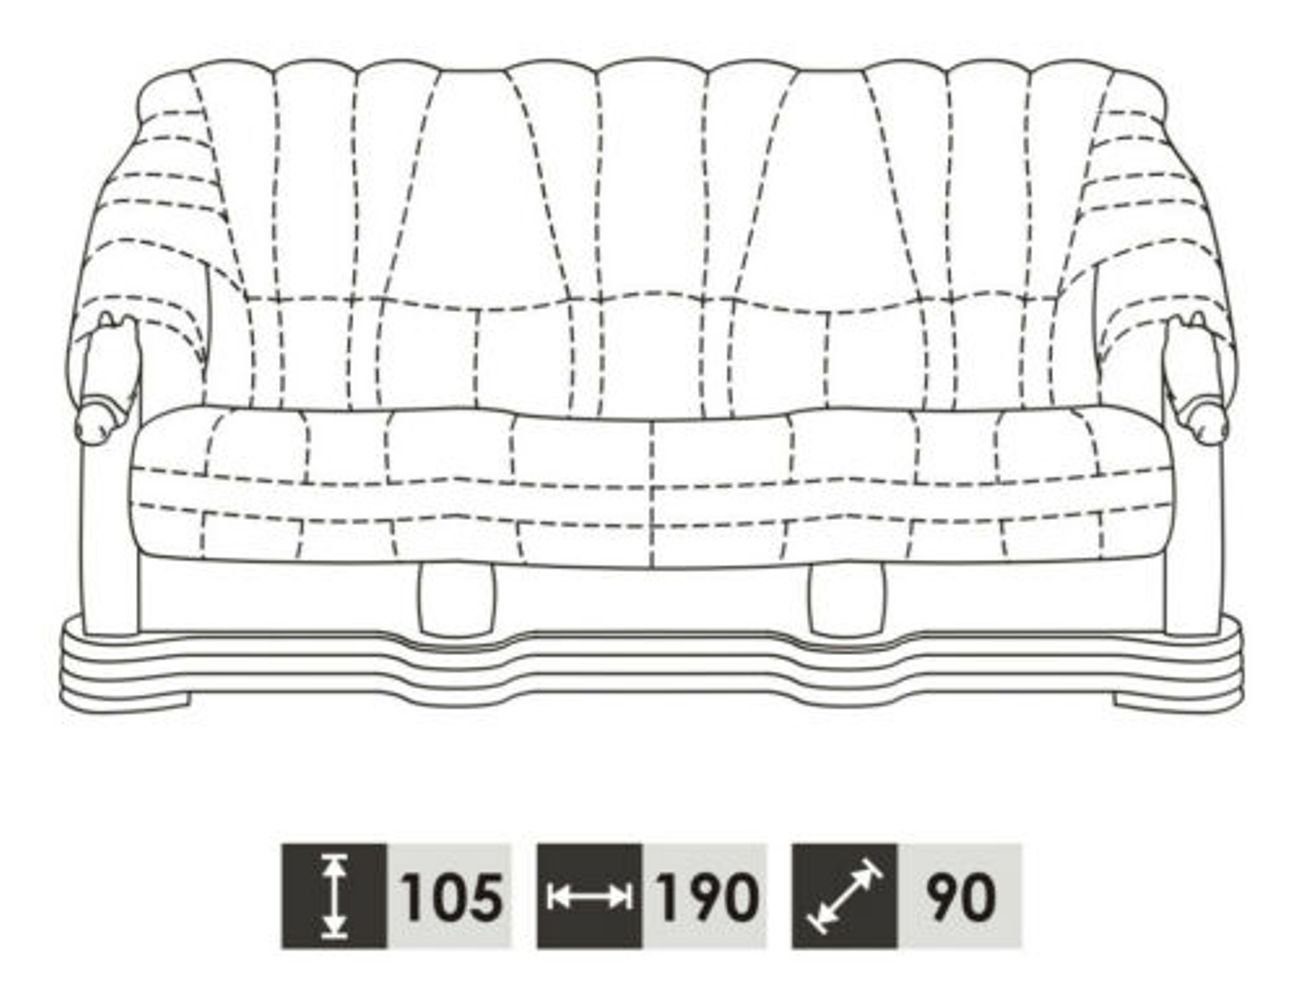 JVmoebel Sofa Klassische Dreisitzer Couch Echtes 100% in Europe Made Polster Sofa Leder